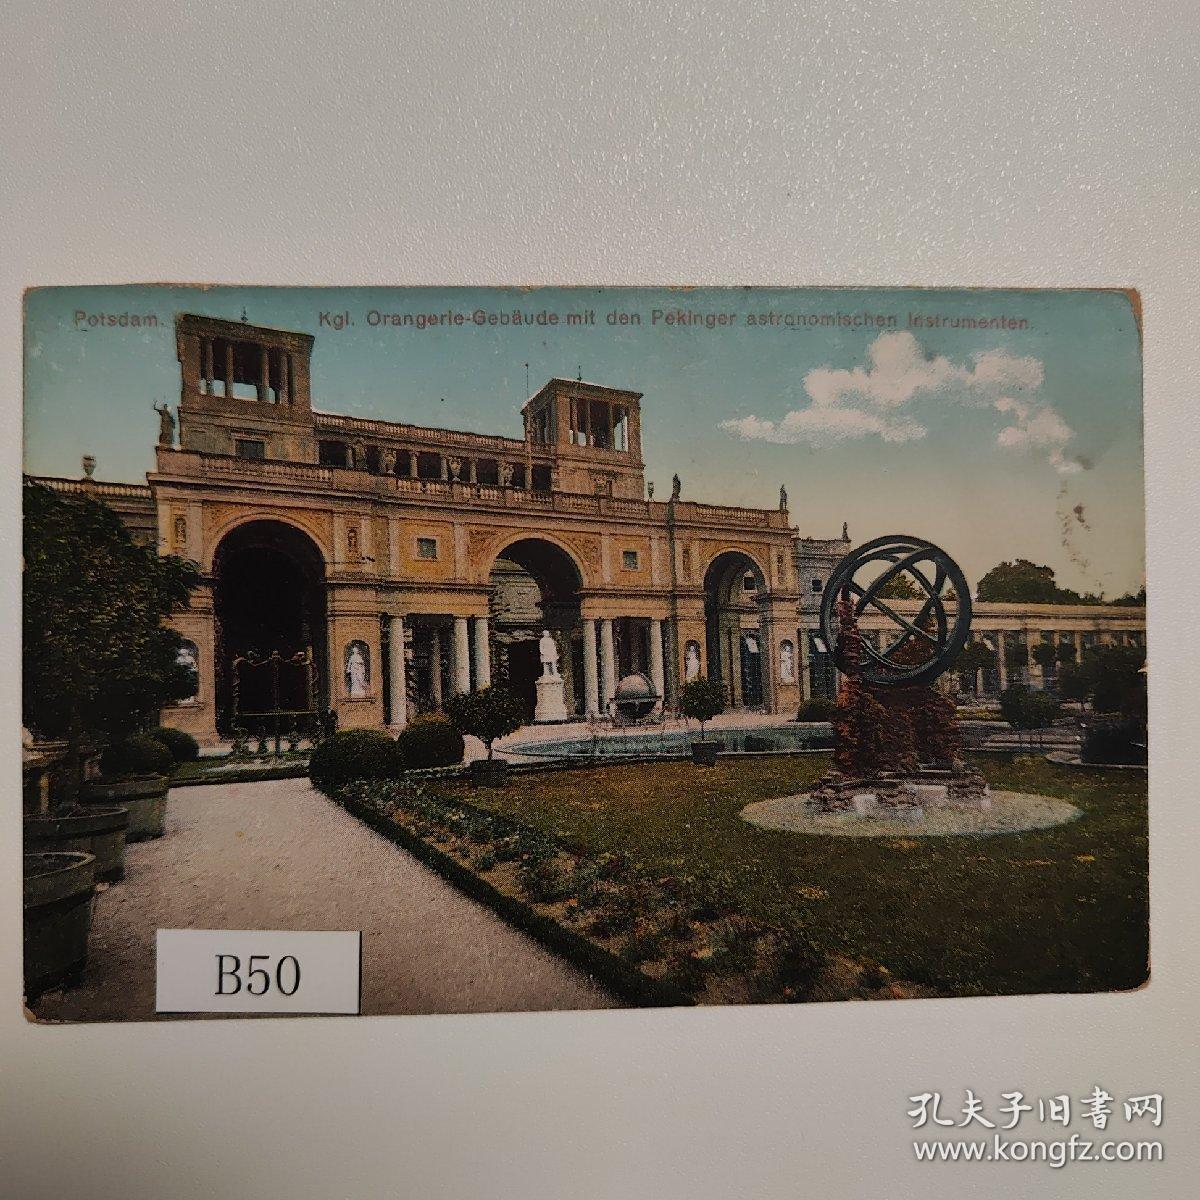 B50 北京古观象台仪器在波茨坦宫橘宫 1915年德国明信片 空白片